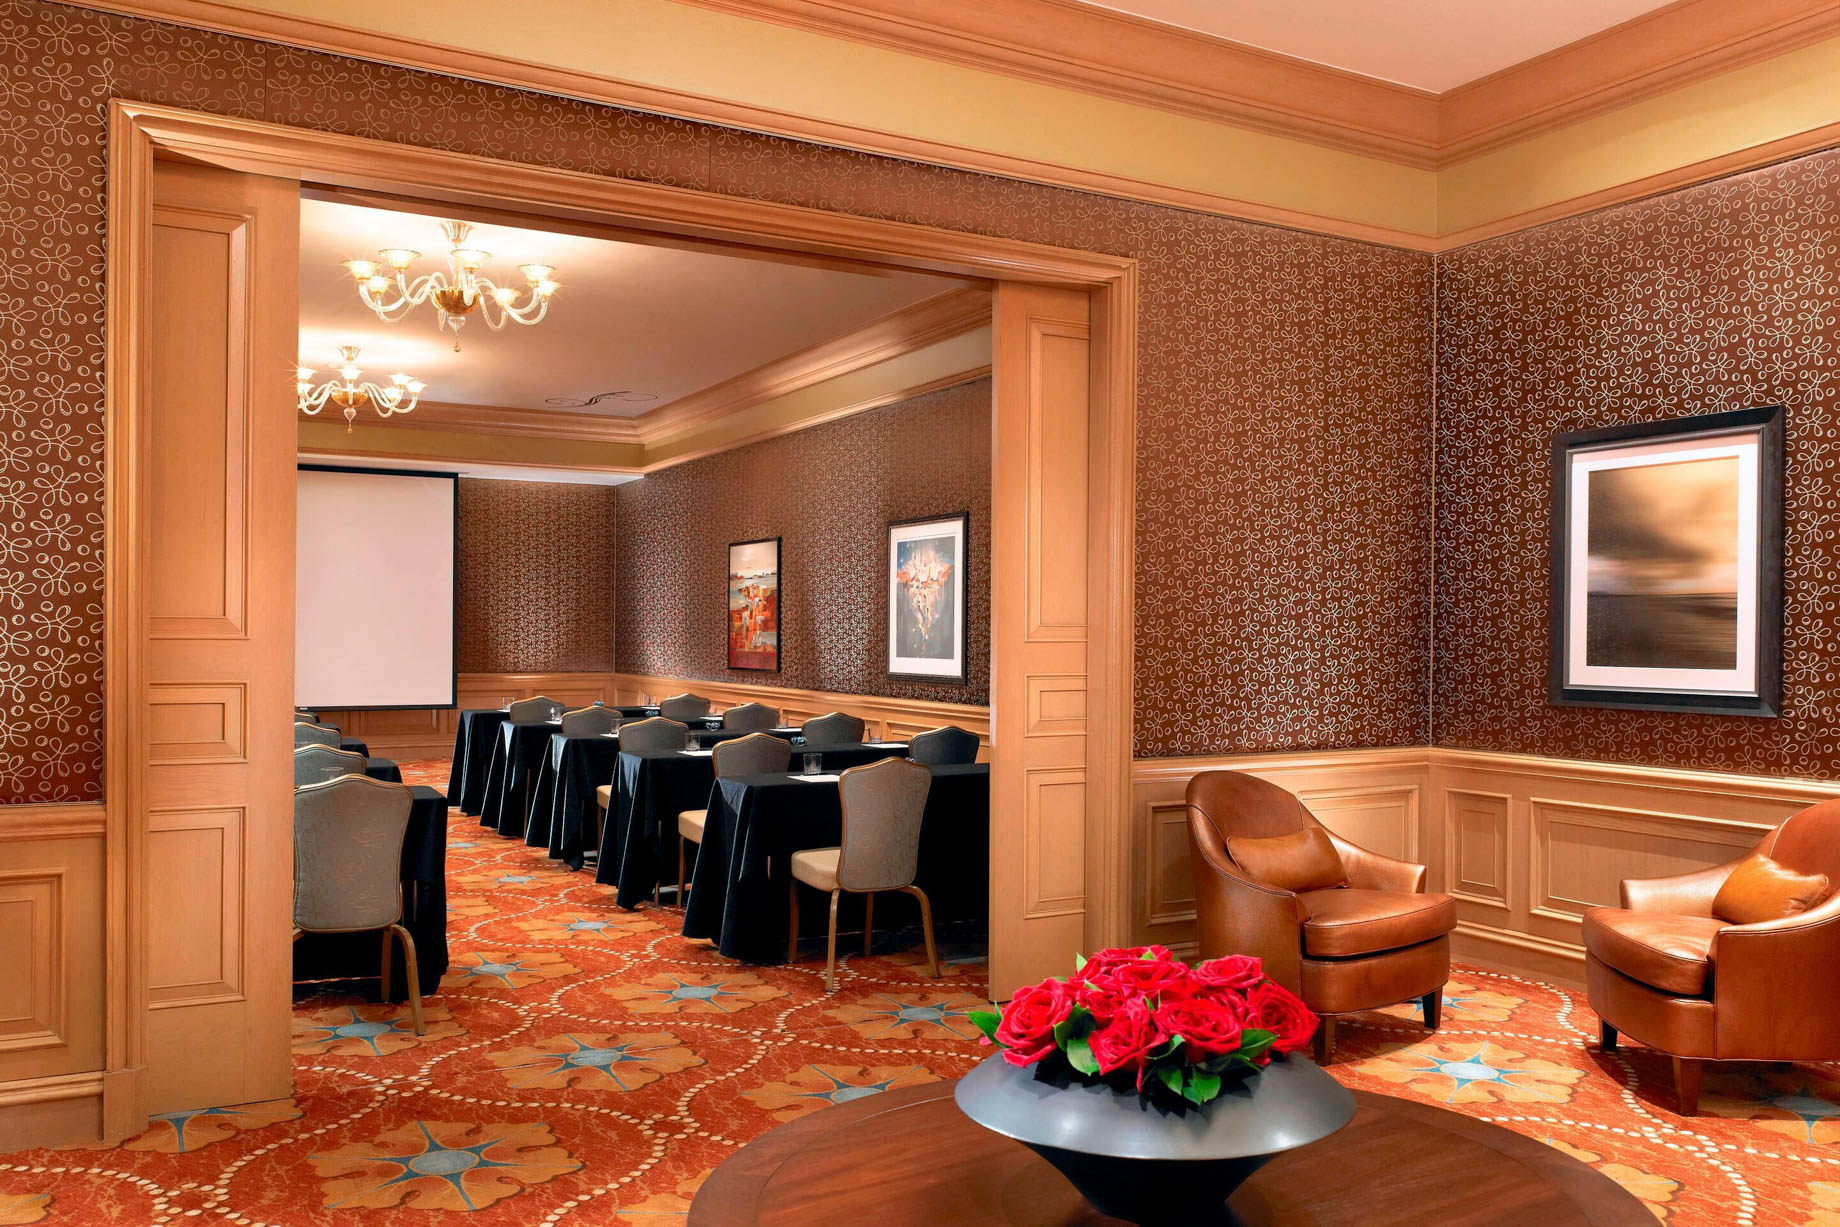 The St. Regis Houston Hotel – Houston, TX, USA – The Plaza Meeting Room Classroom Setup